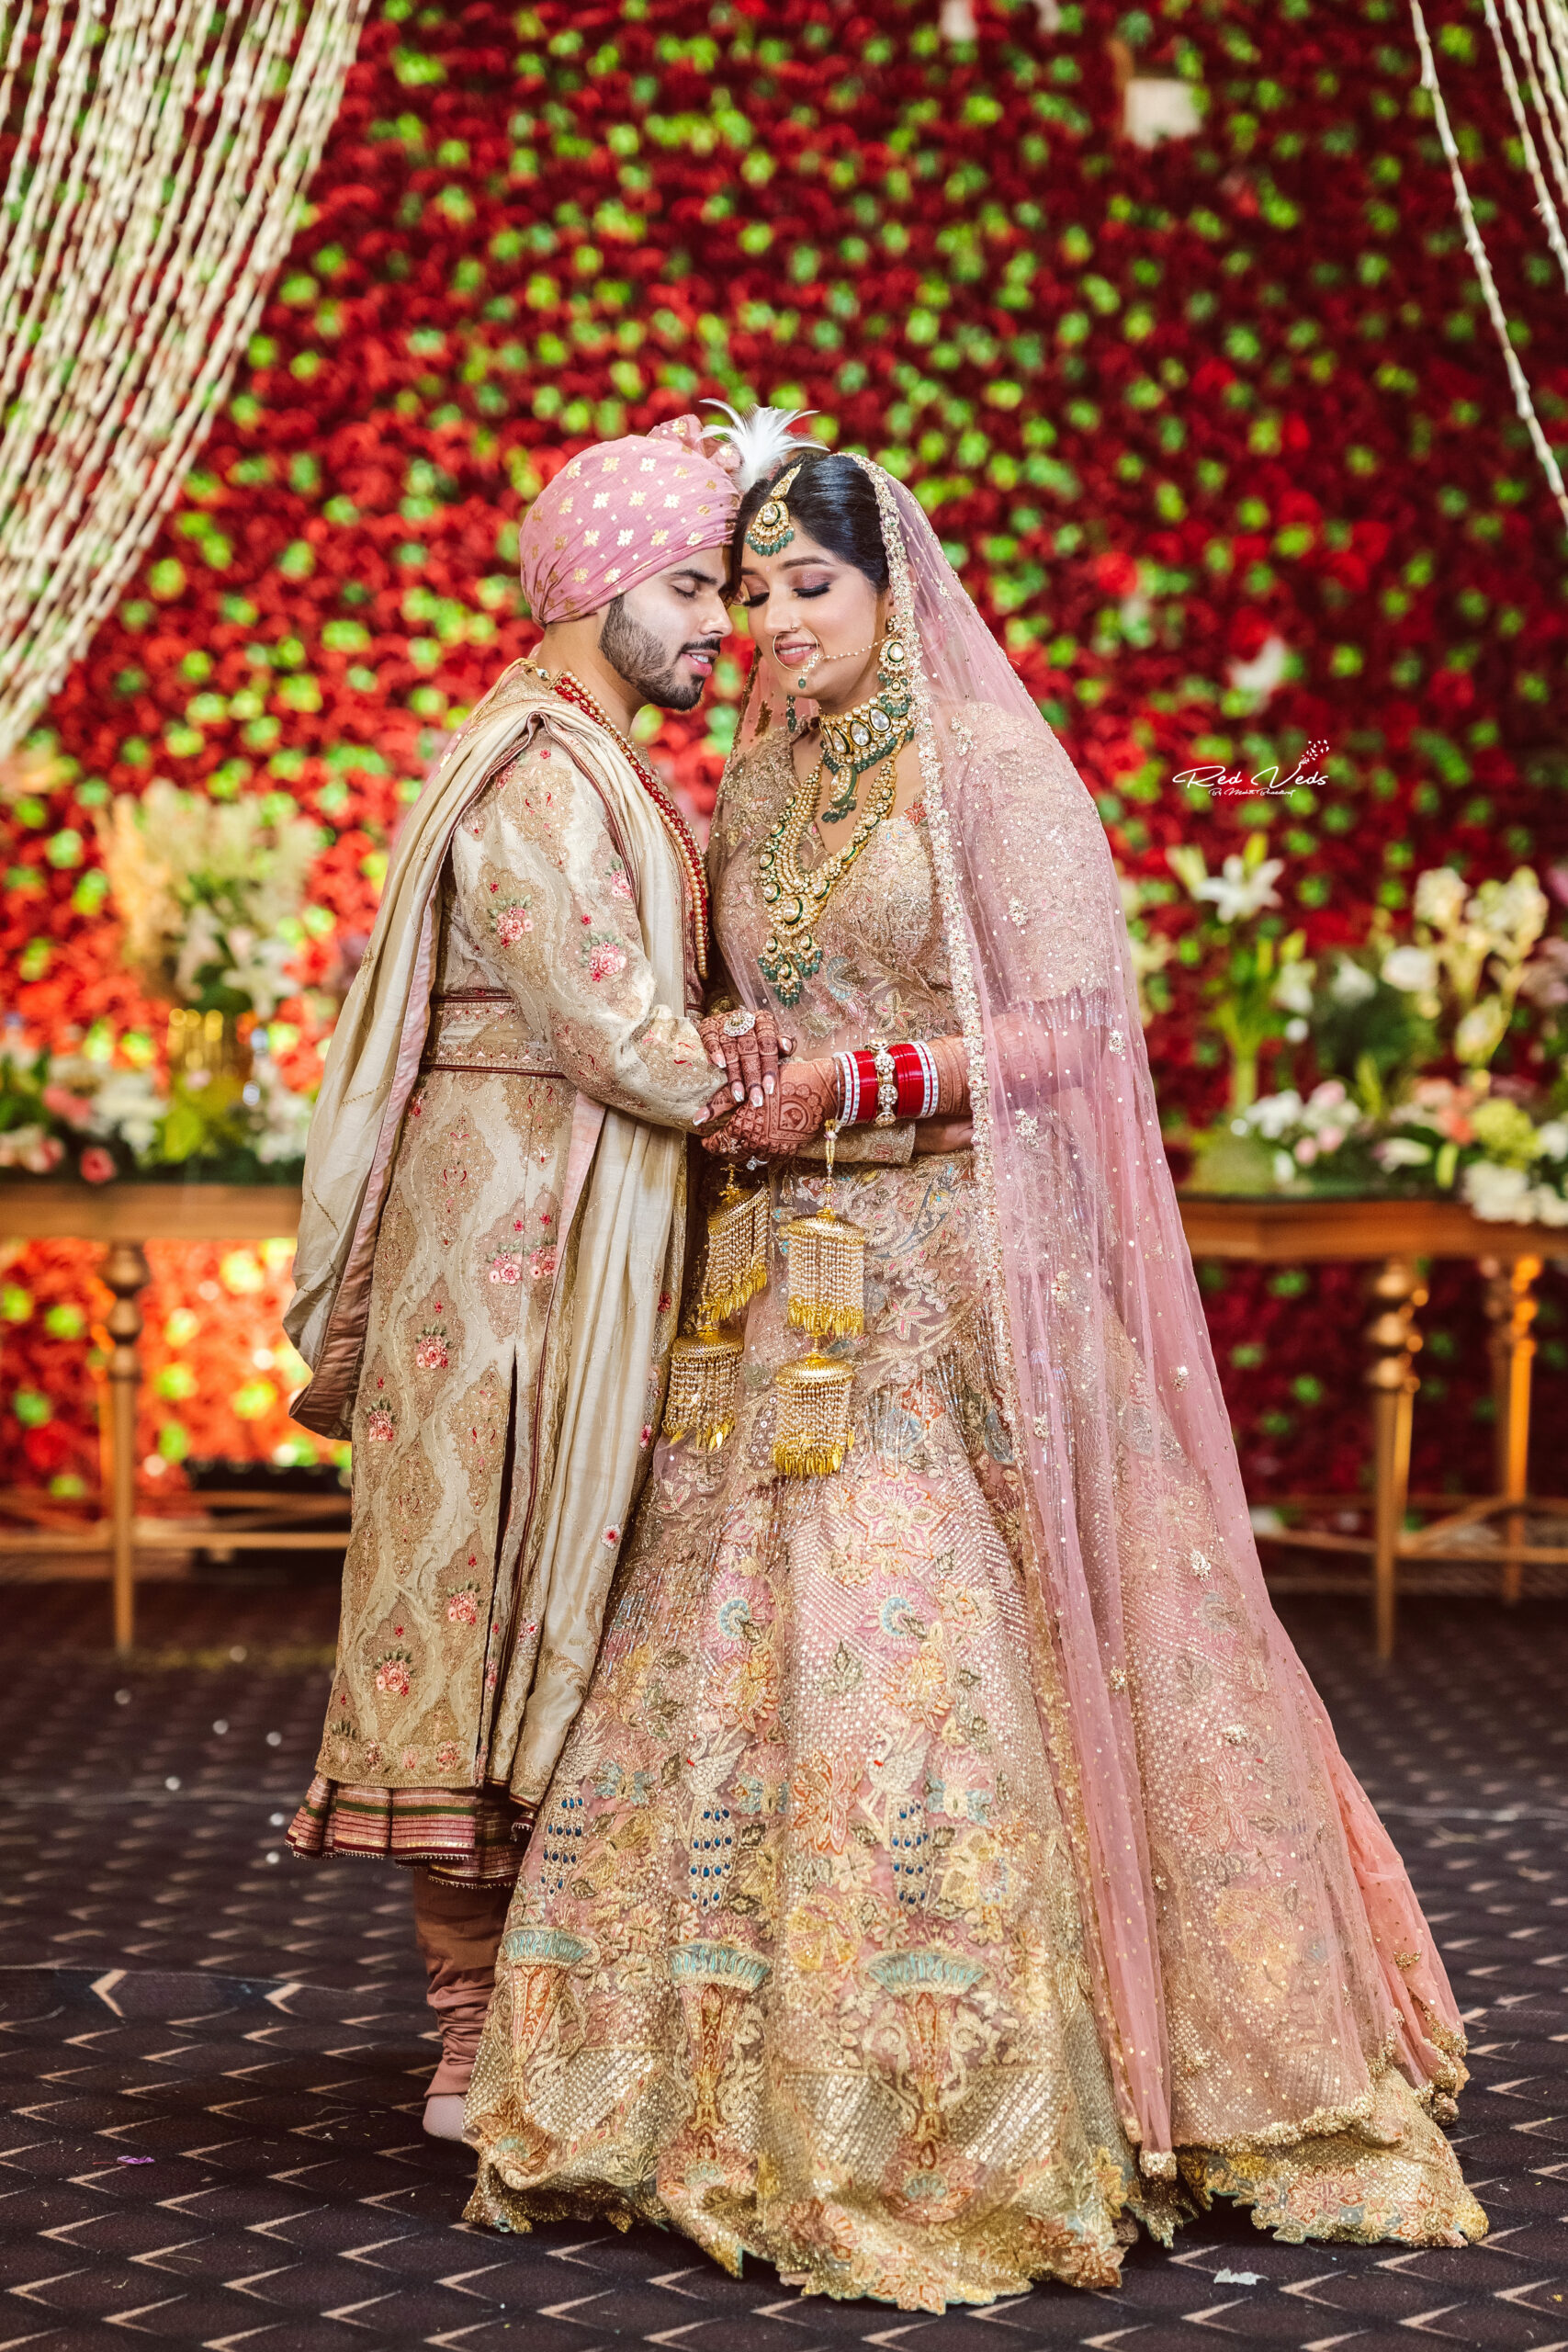 Best Indian wedding couple poses Archives | Sandeep Shokeen